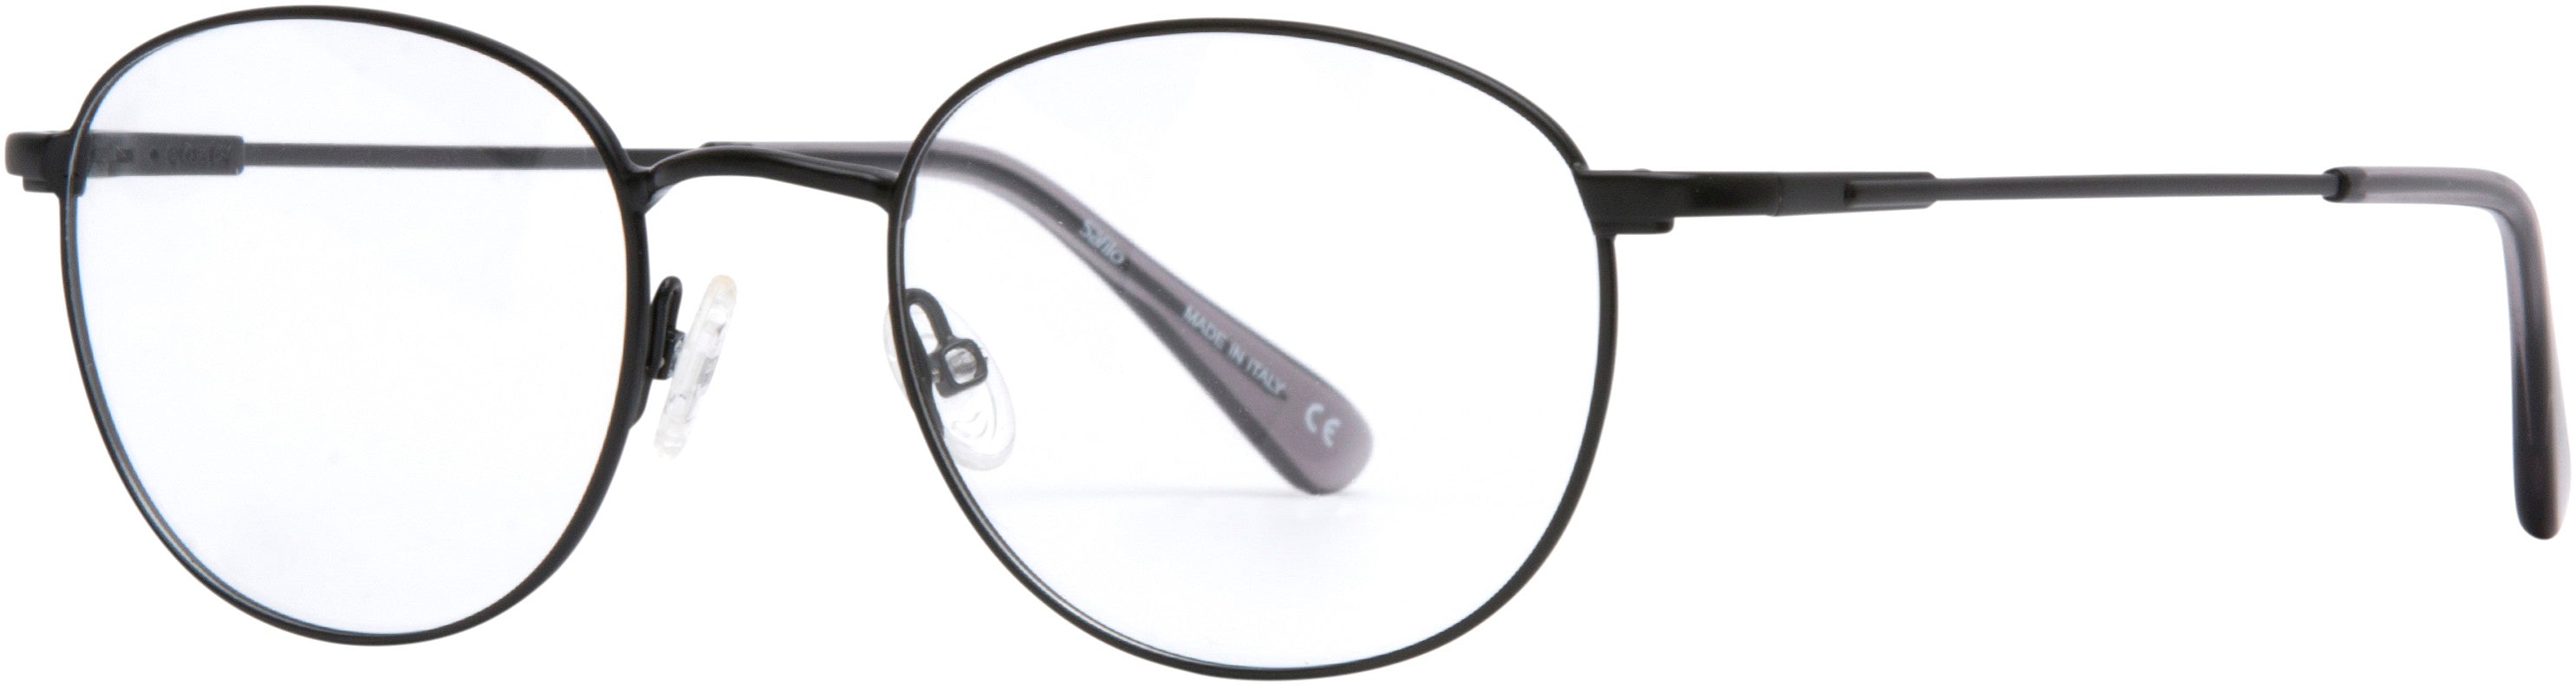  Elasta 7226 Tea Cup Eyeglasses 0003-0003  Matte Black (00 Demo Lens)